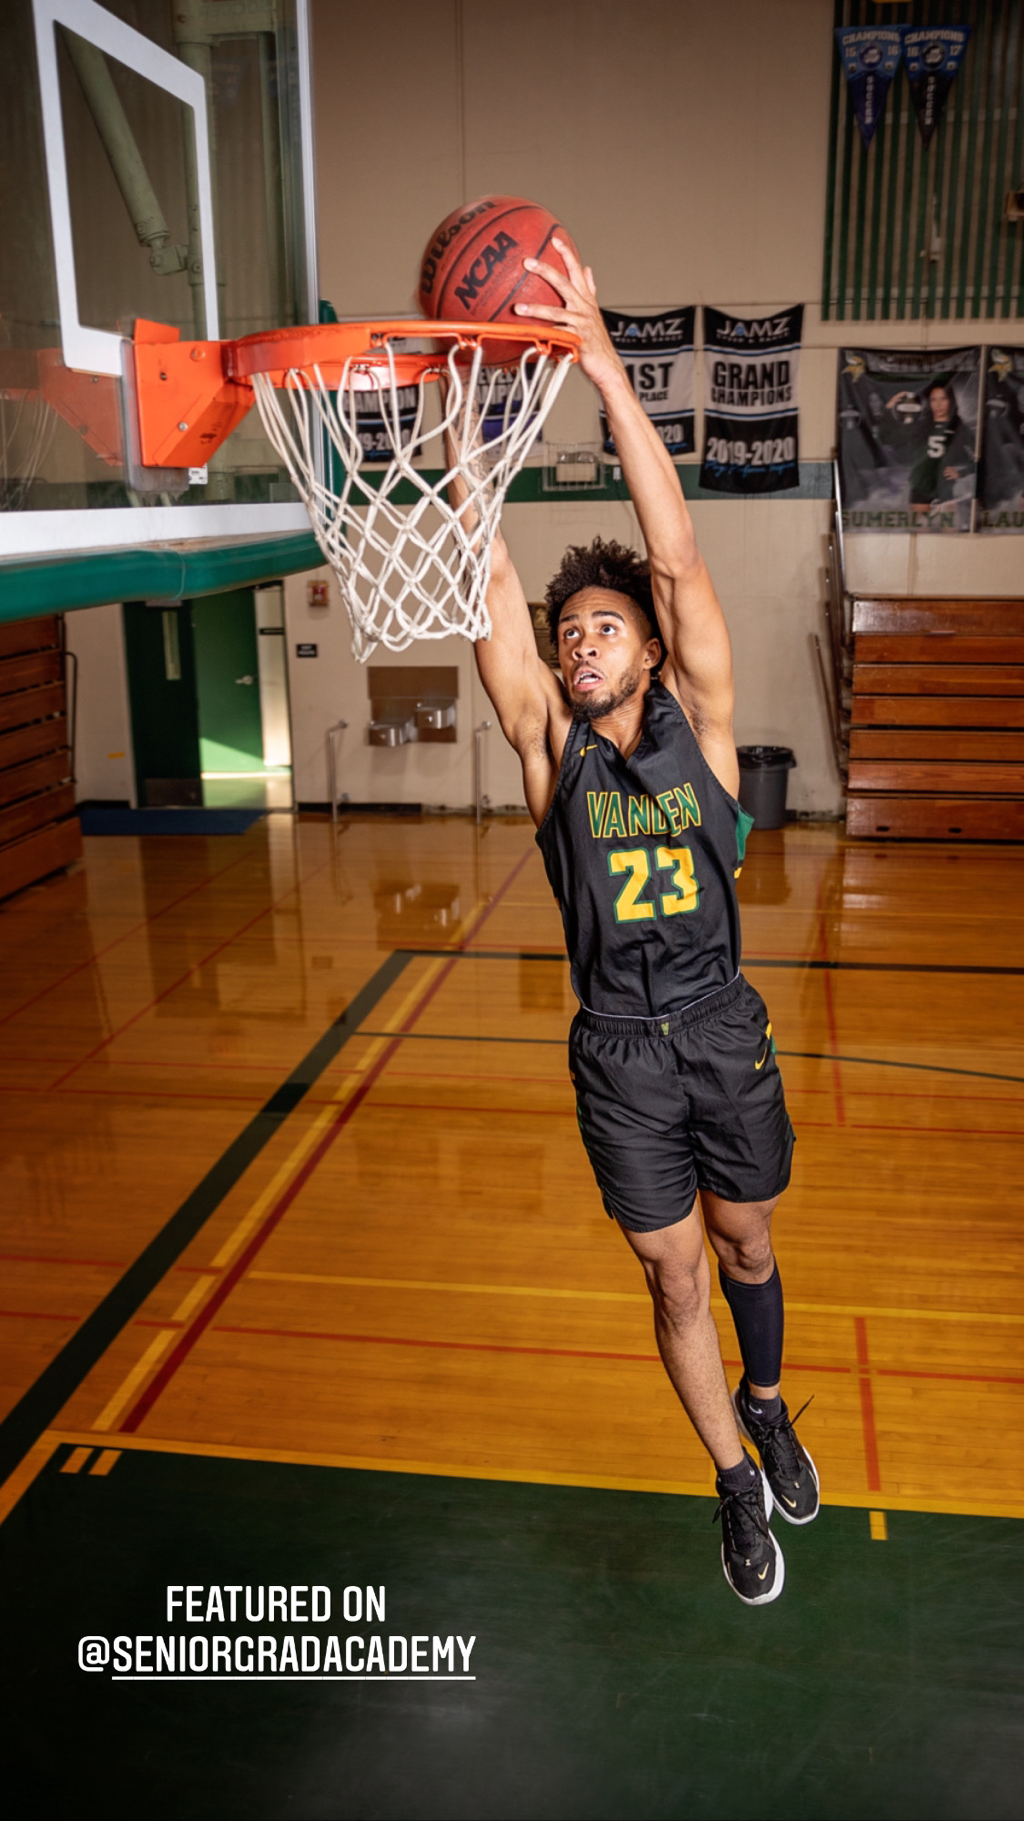 teenage boy shooting a basketball into the hoop at Vanden High School